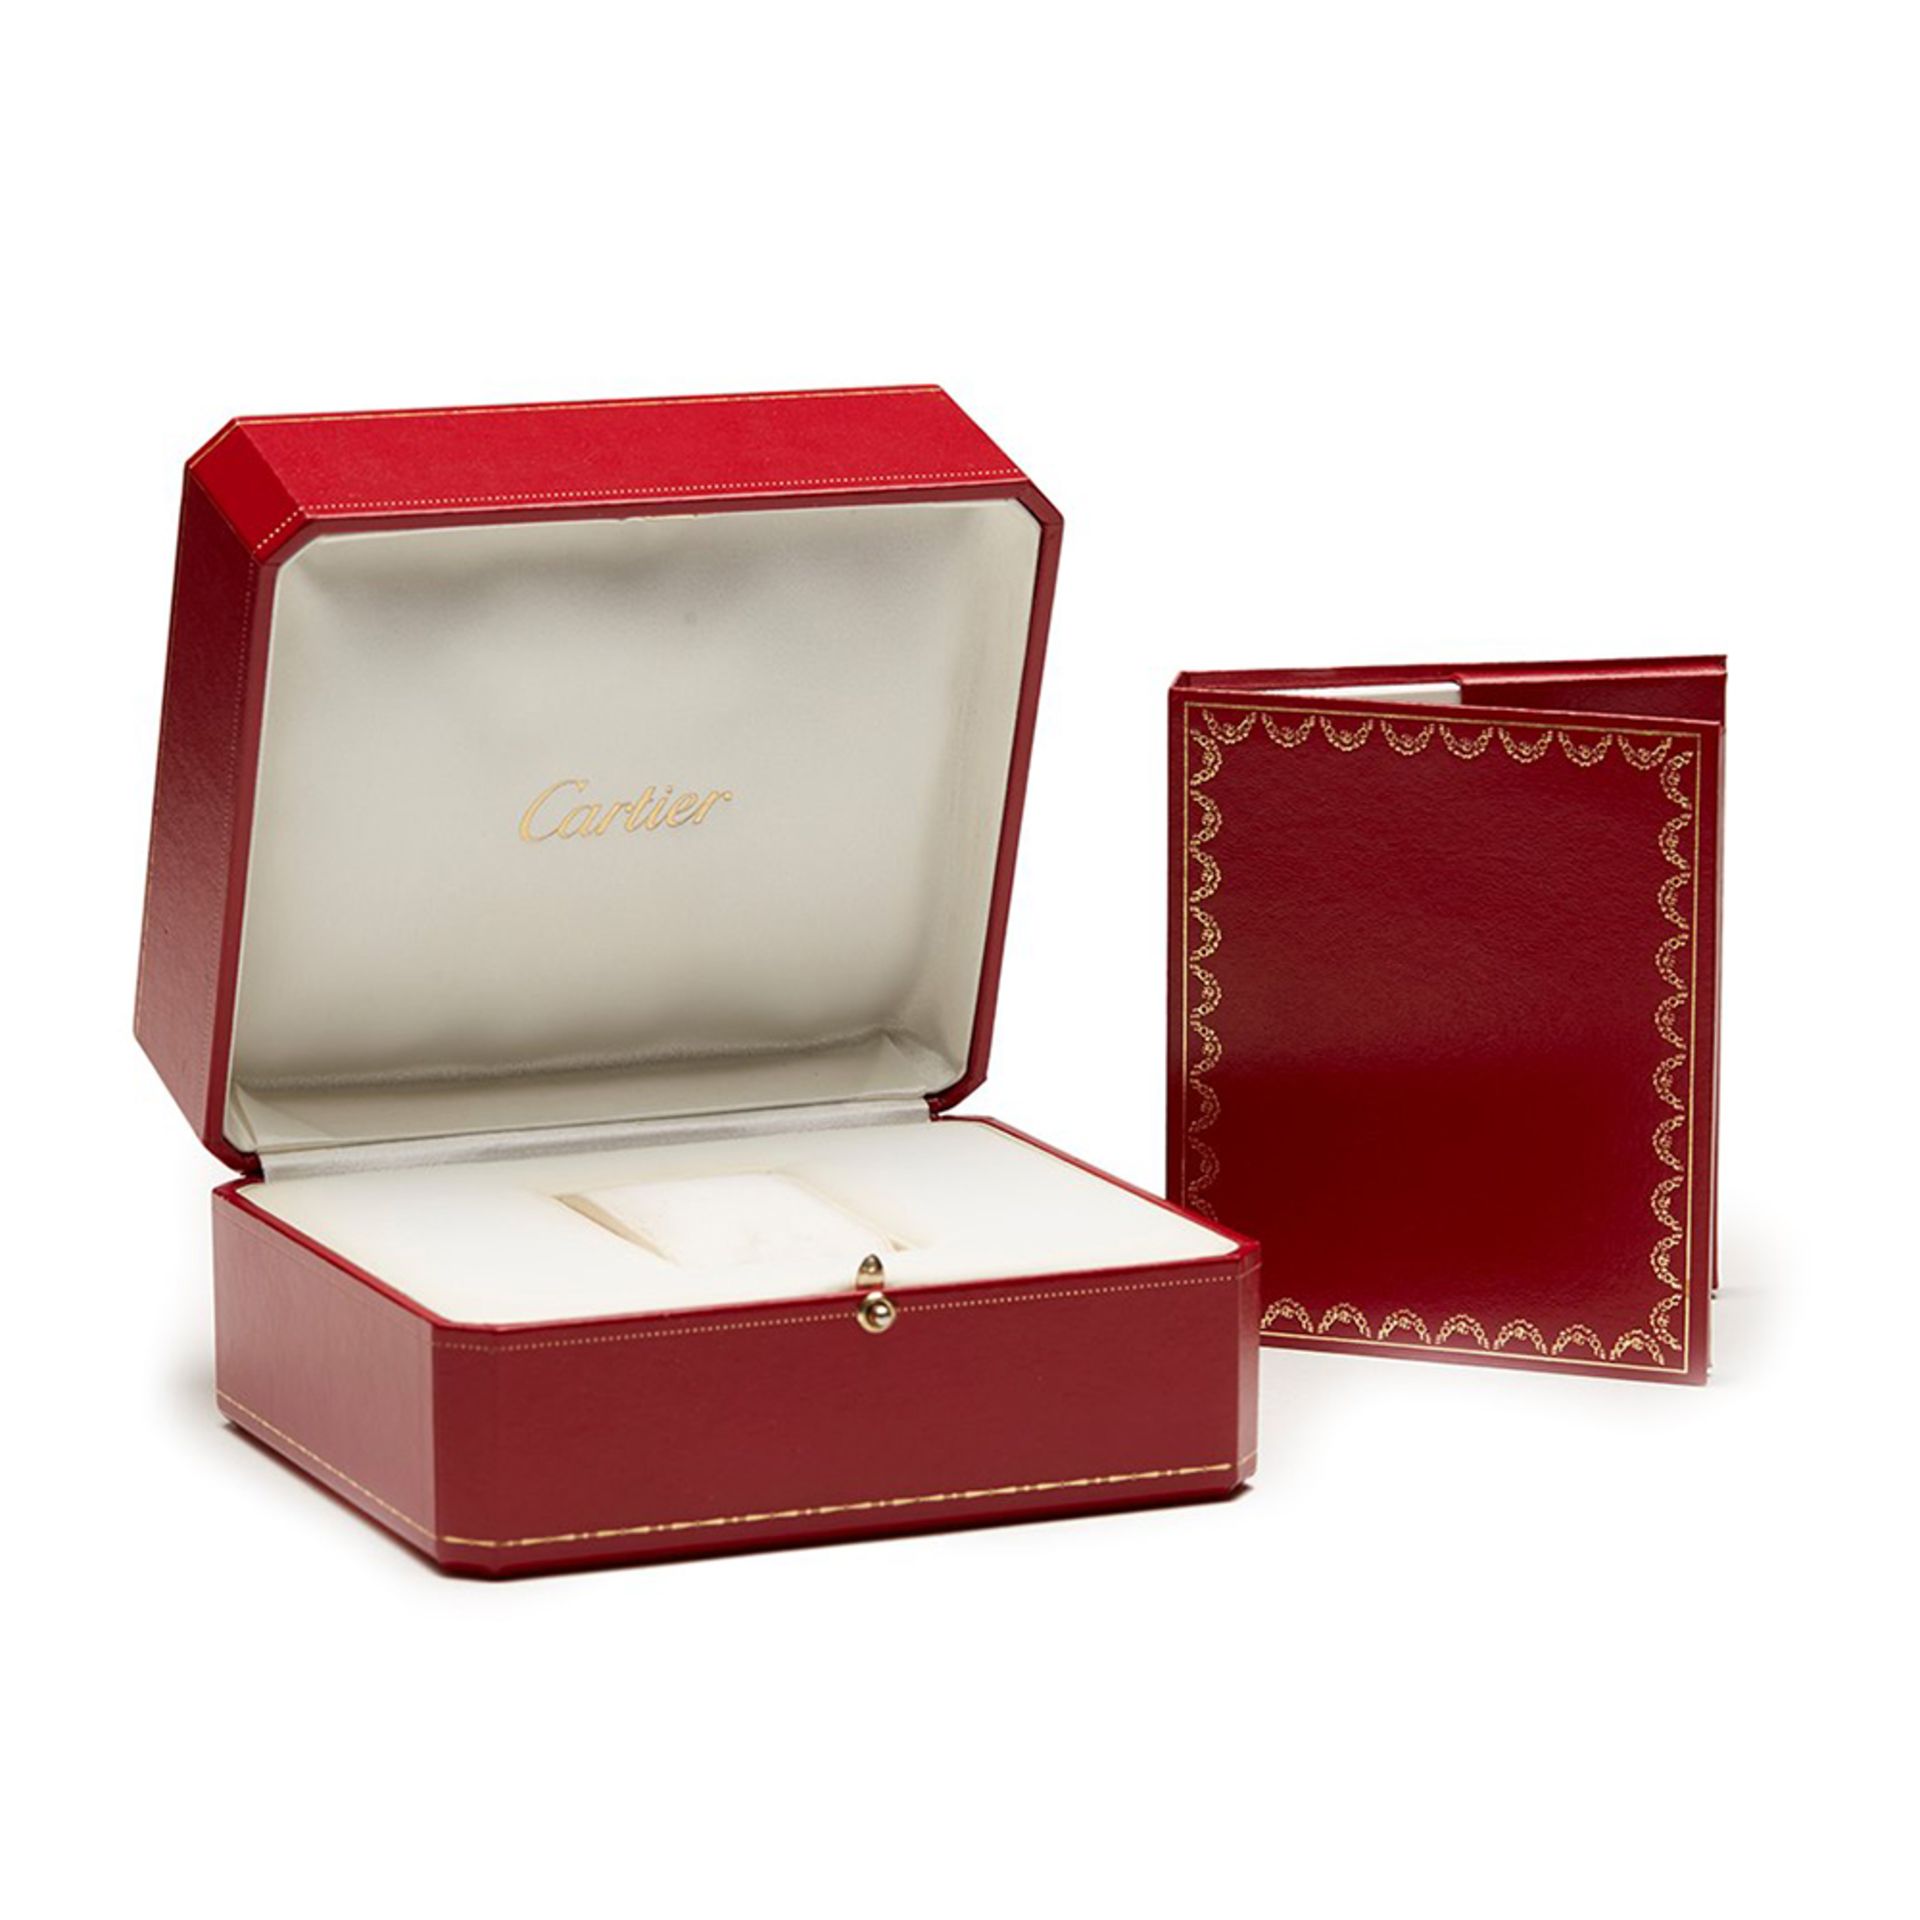 Cartier Baignoire Mini Original Diamond Bezel 18mm 18k White Gold - 2369 - Image 8 of 8